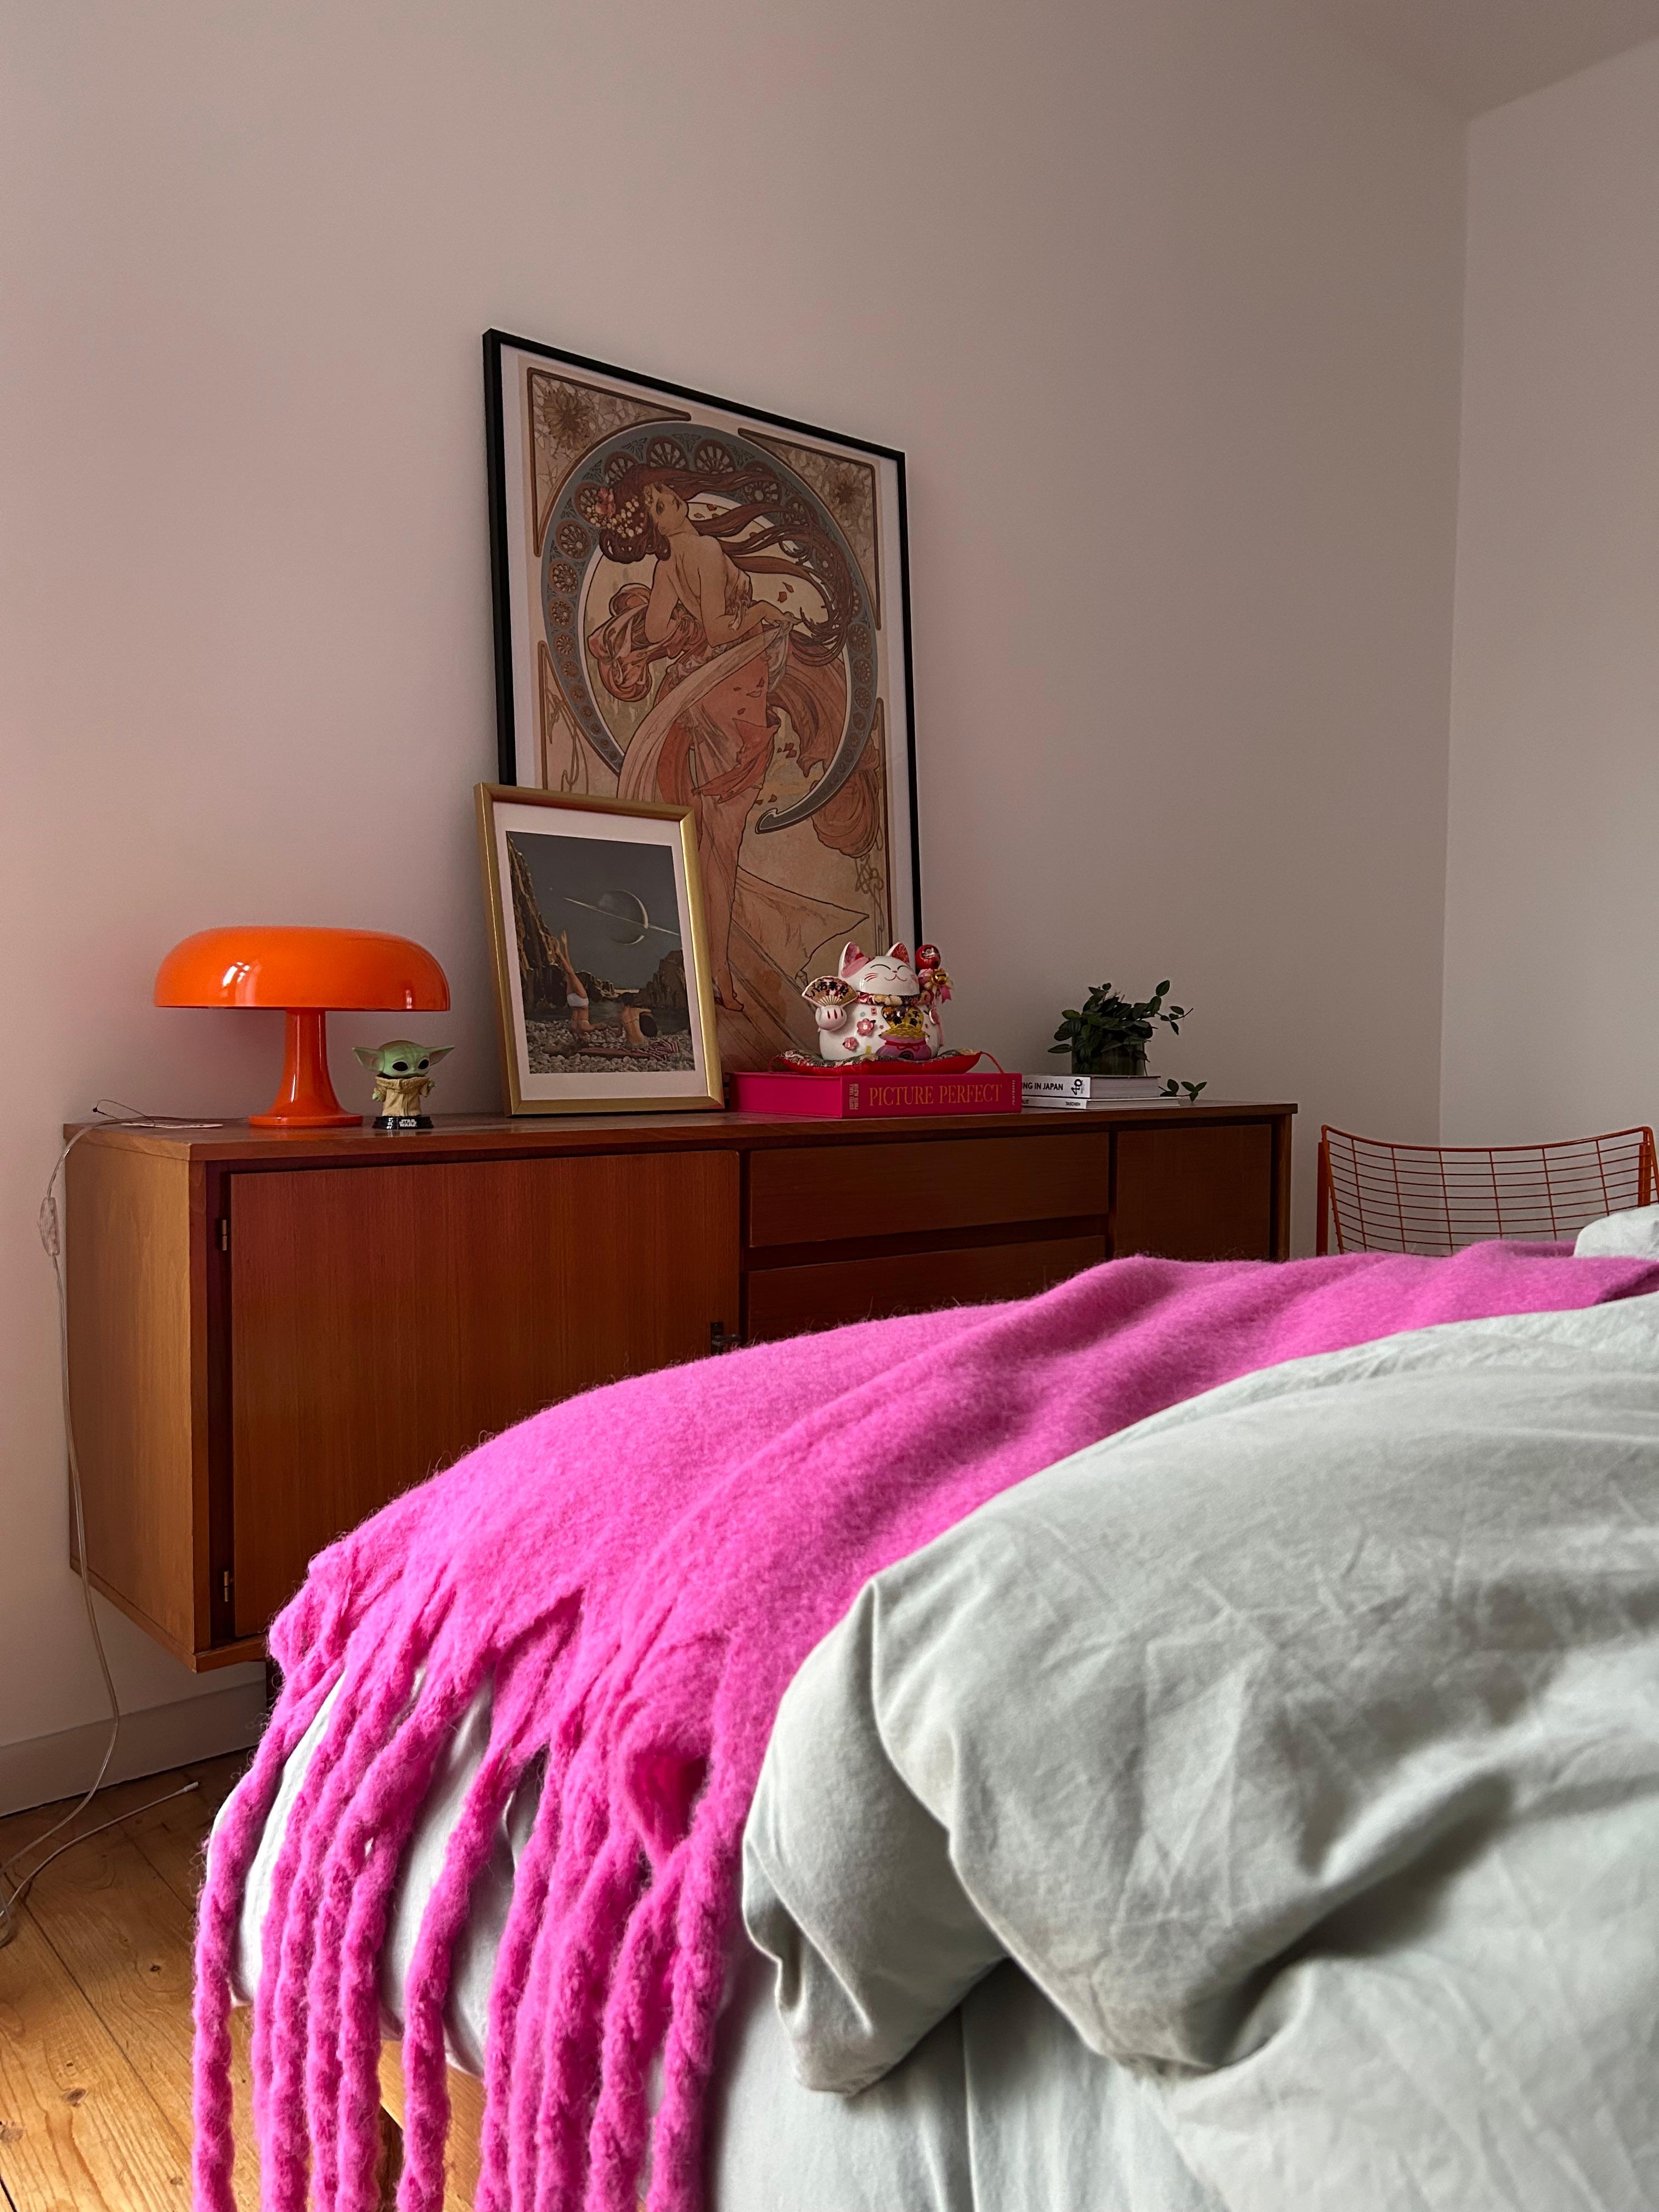 Schlafzimmer-Romantik

#schlafzimmer #schlafzimmerdesign #midcenturymodern #kommodenliebe